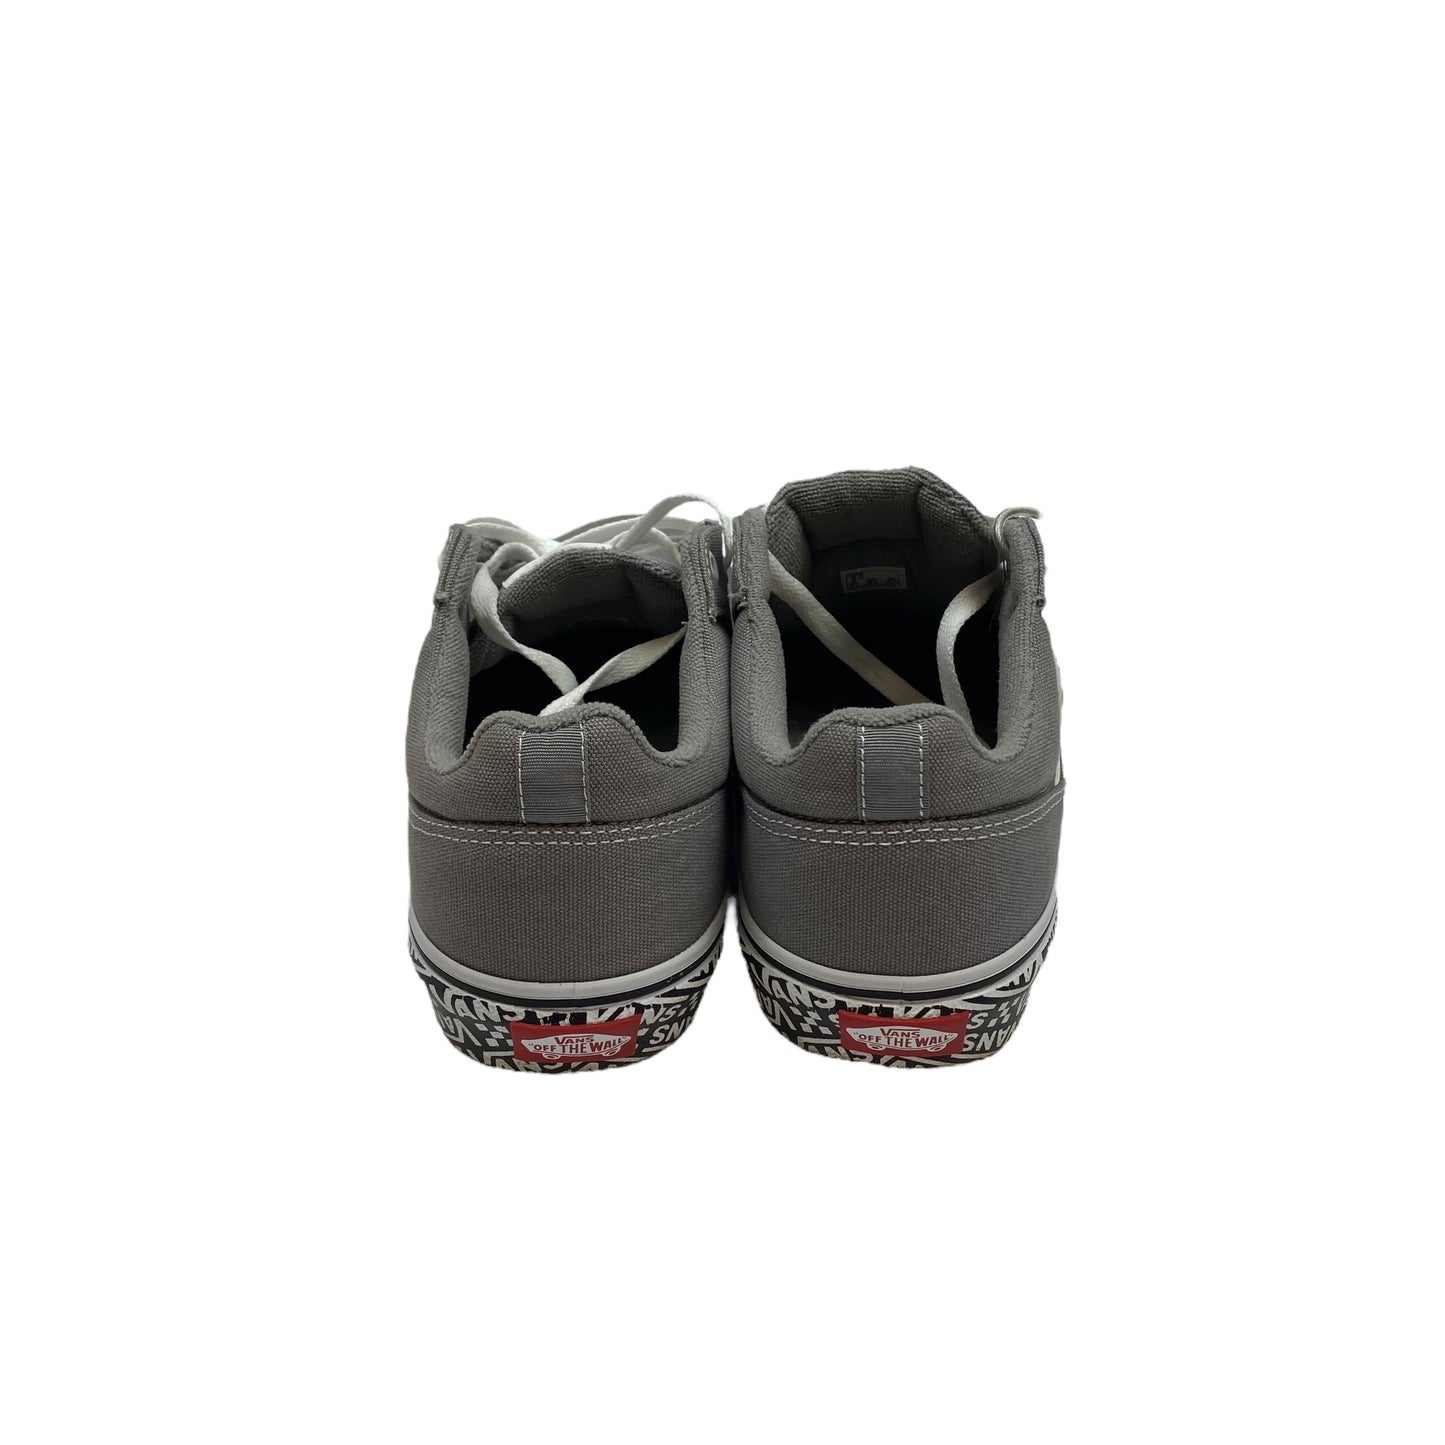 Grey Shoes Sneakers Vans, Size 10.5